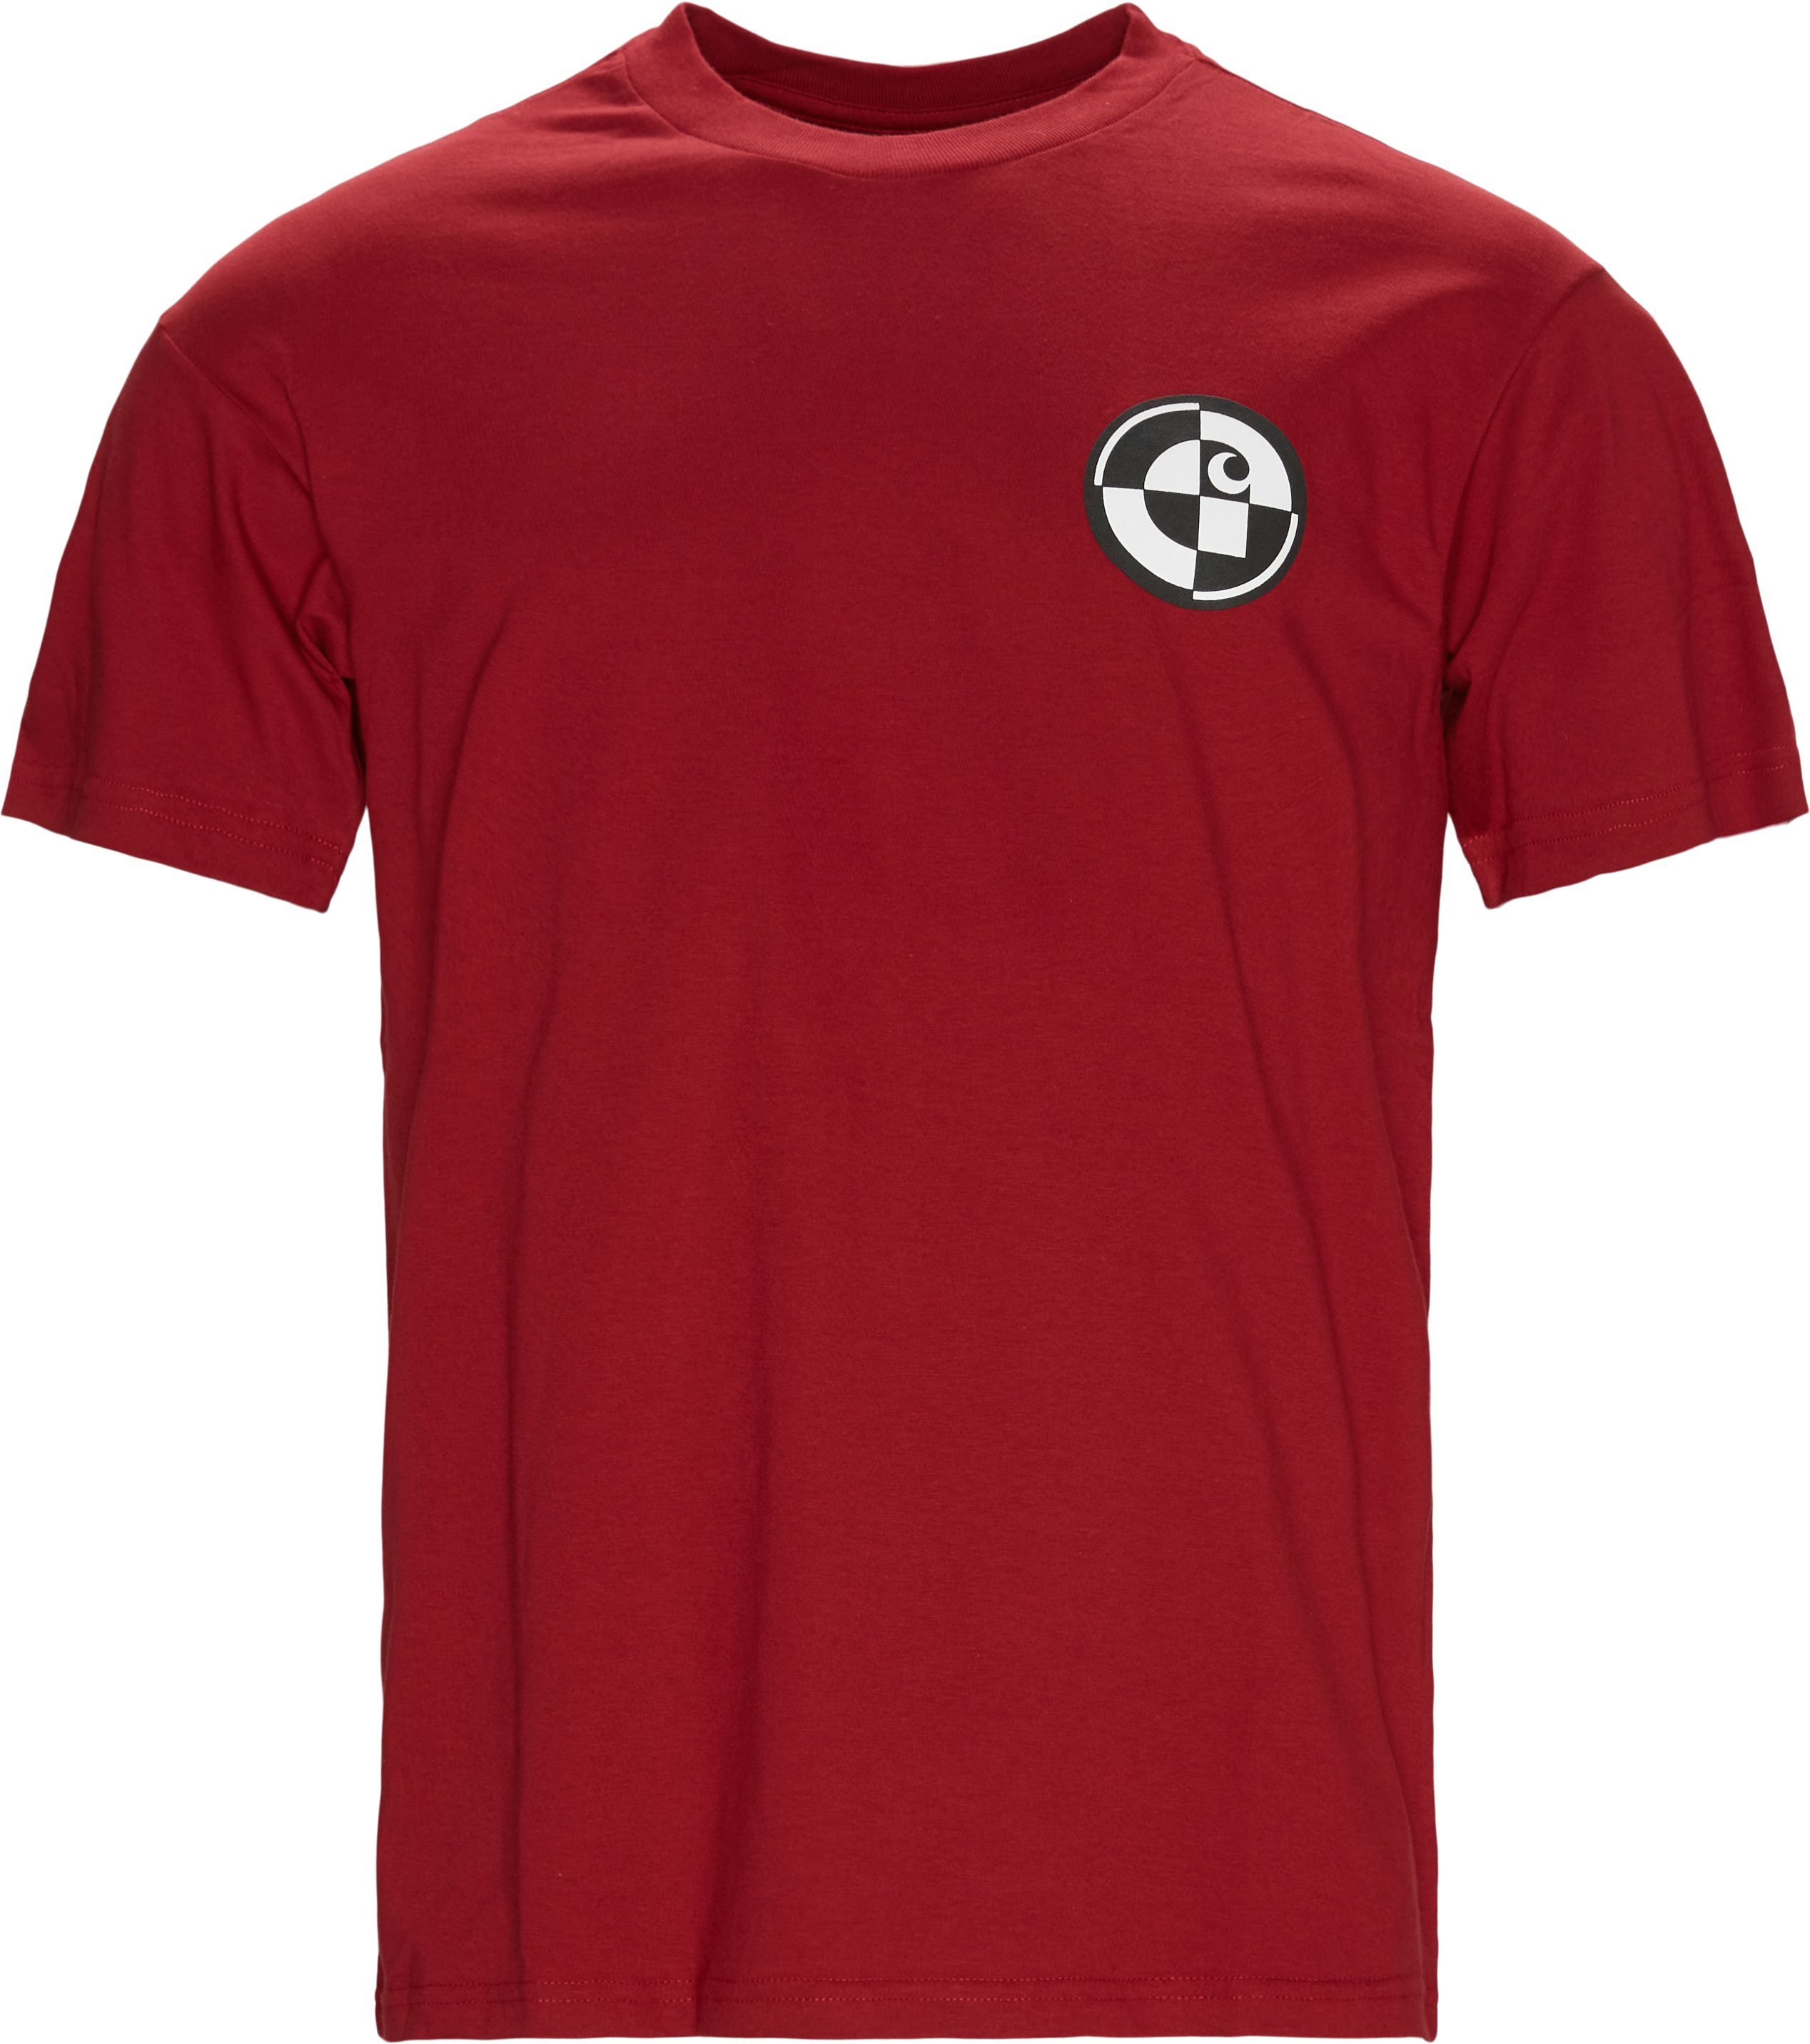 Range Tee - T-shirts - Regular fit - Röd